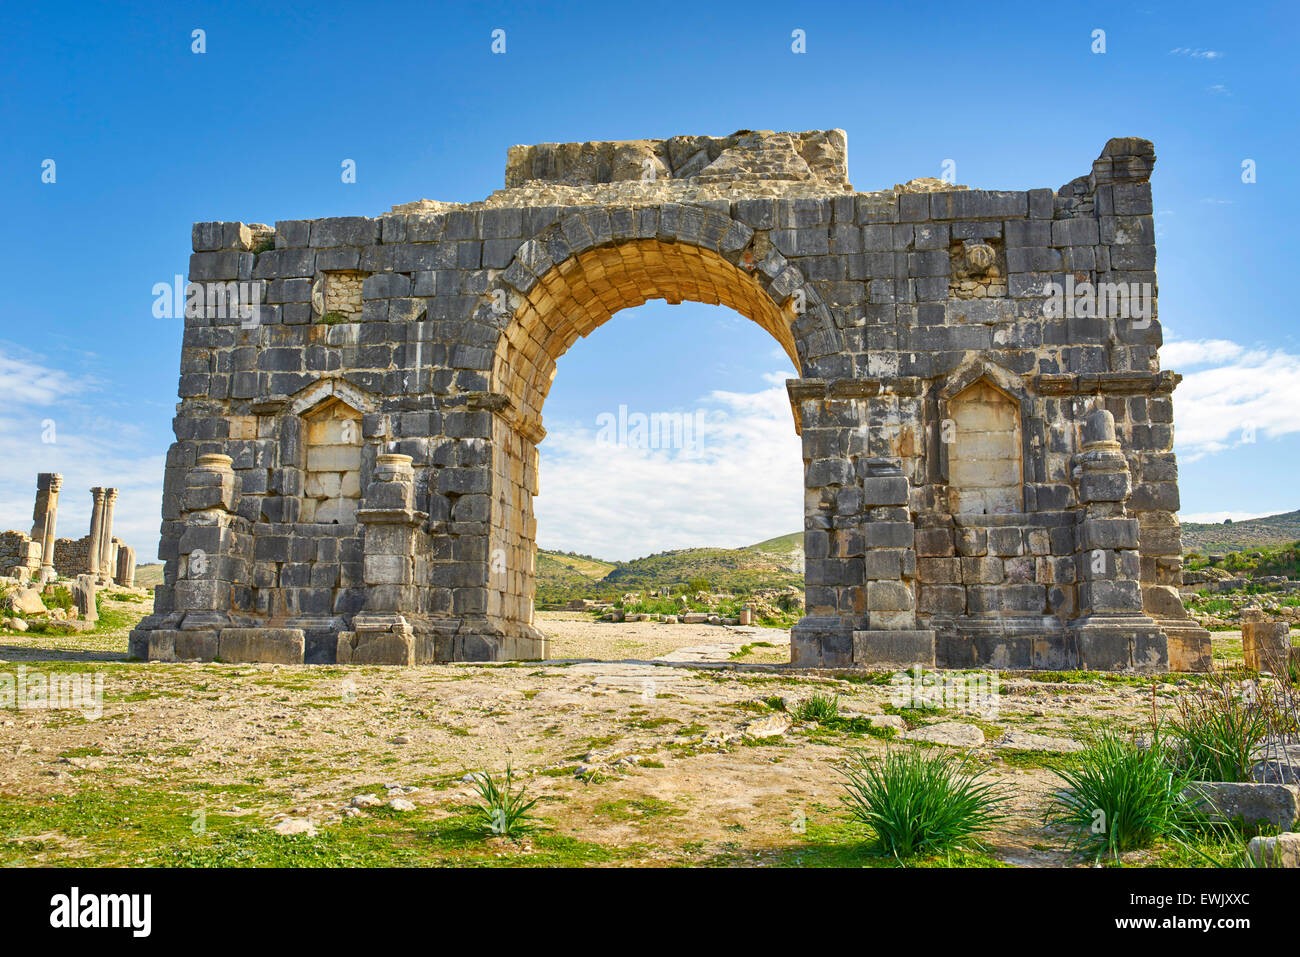 Ruinas romanas de Volubilis, cerca de Meknes, arco triunfal, UNESCO, Marruecos, África Foto de stock